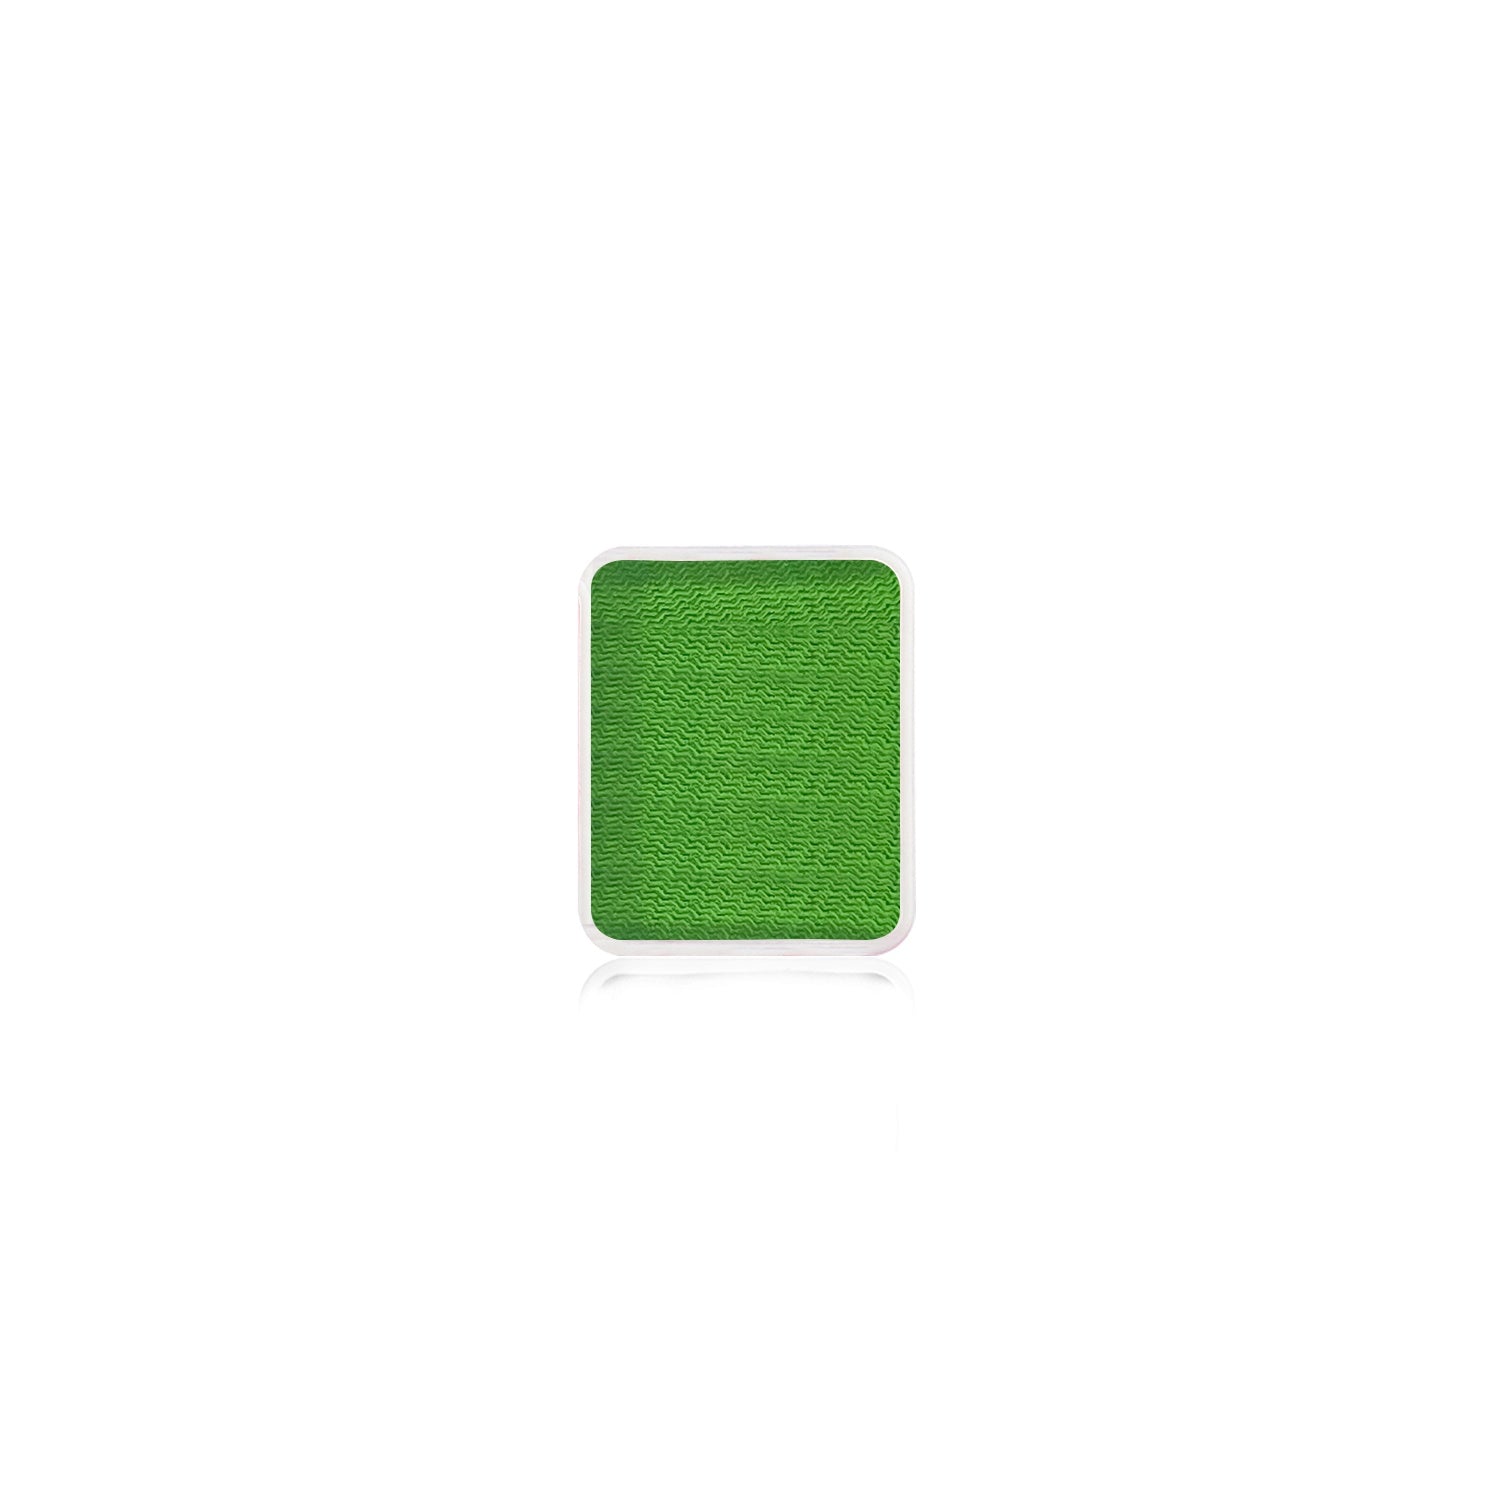 Kraze FX Face Paint Palette Refill - Lime Green (0.21 oz/6 gm)